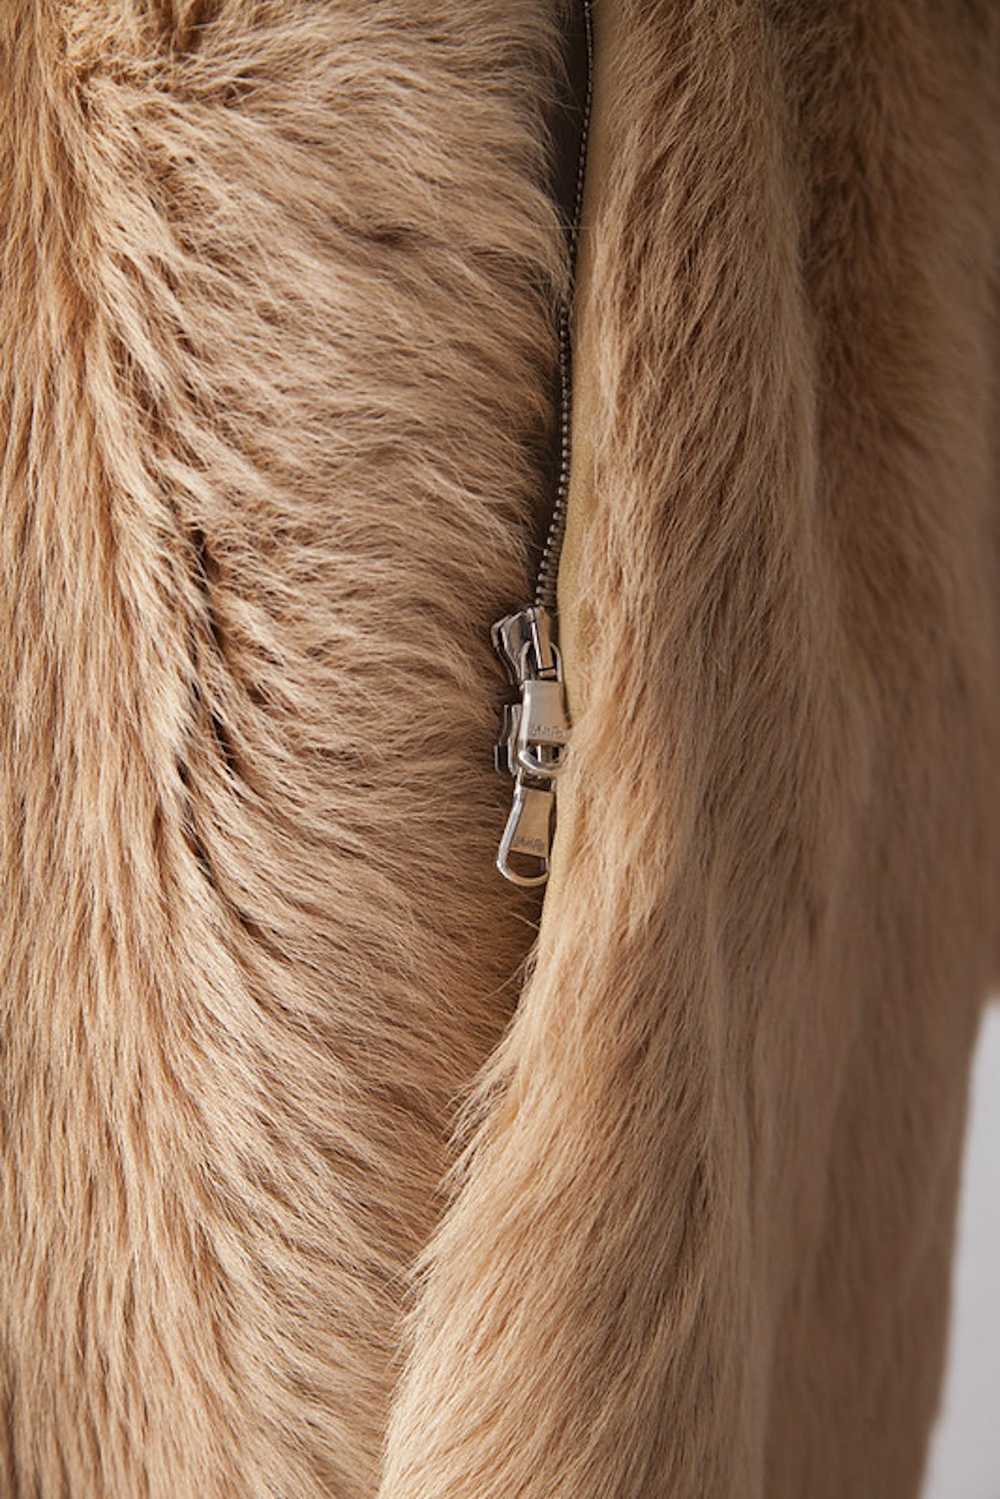 Helmut Lang AW00 fur coat - image 5